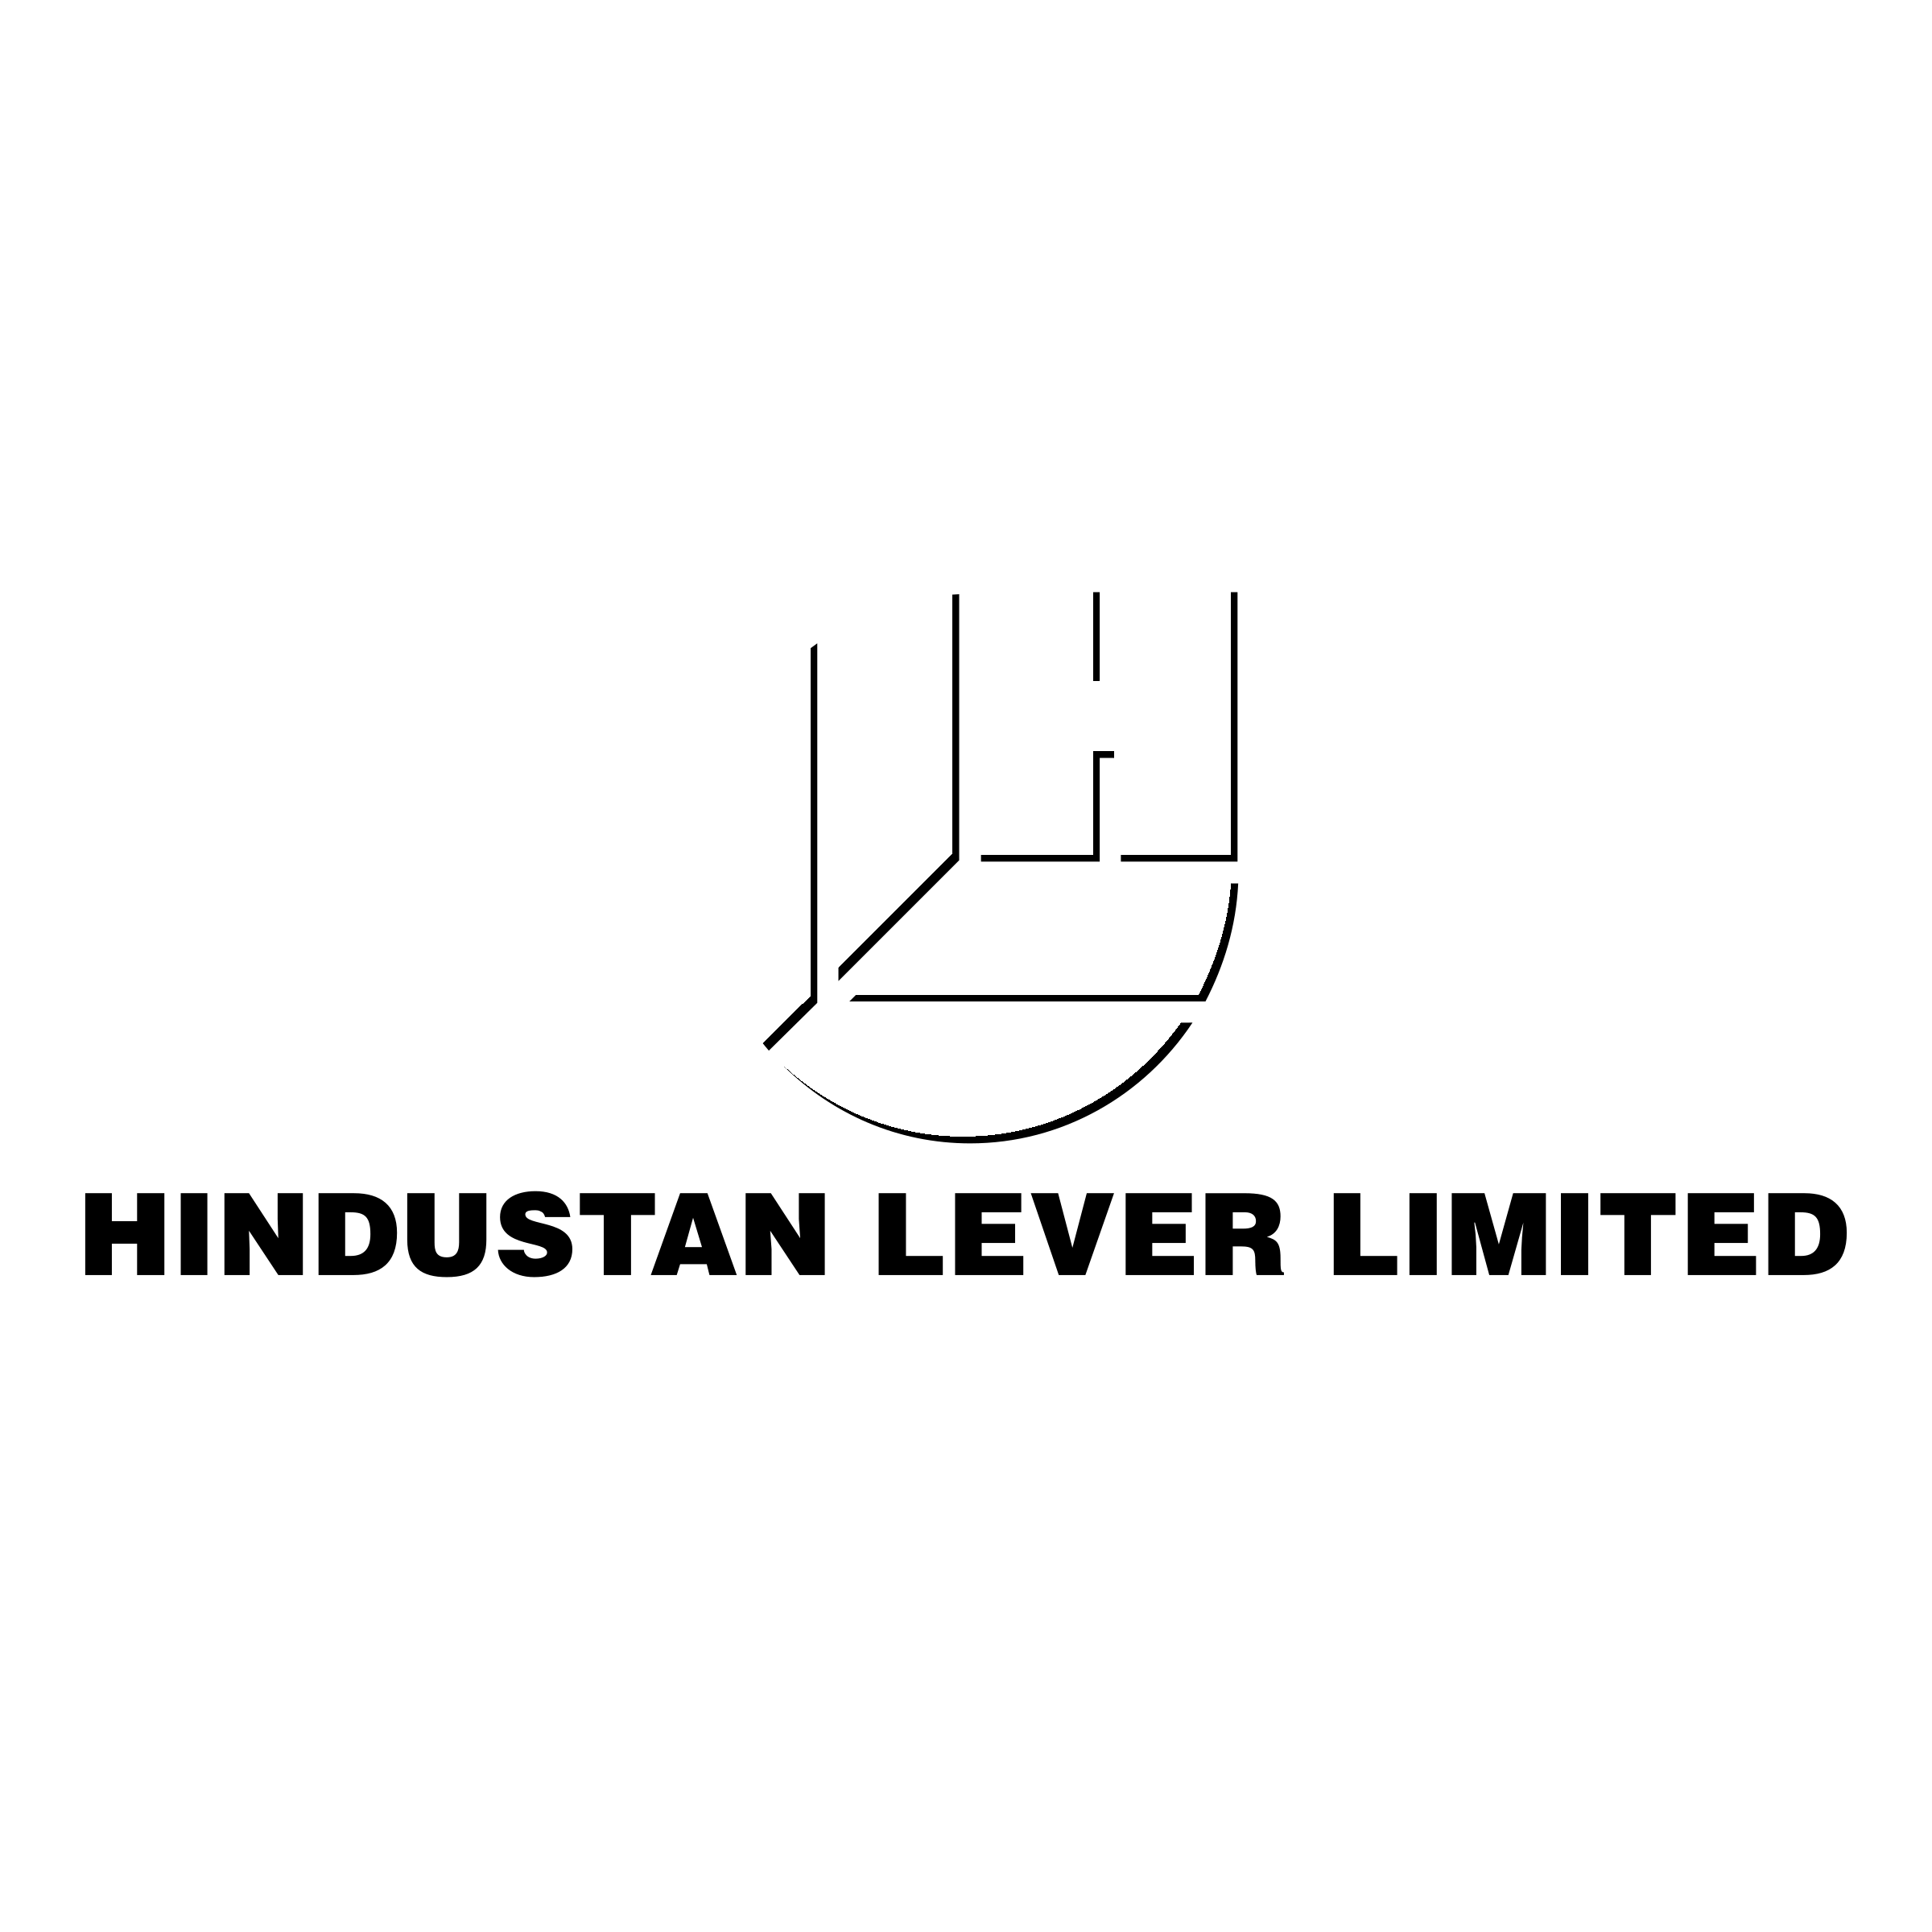 Hindustan Logo - Hindustan Lever Limited Logo PNG Transparent & SVG Vector - Freebie ...